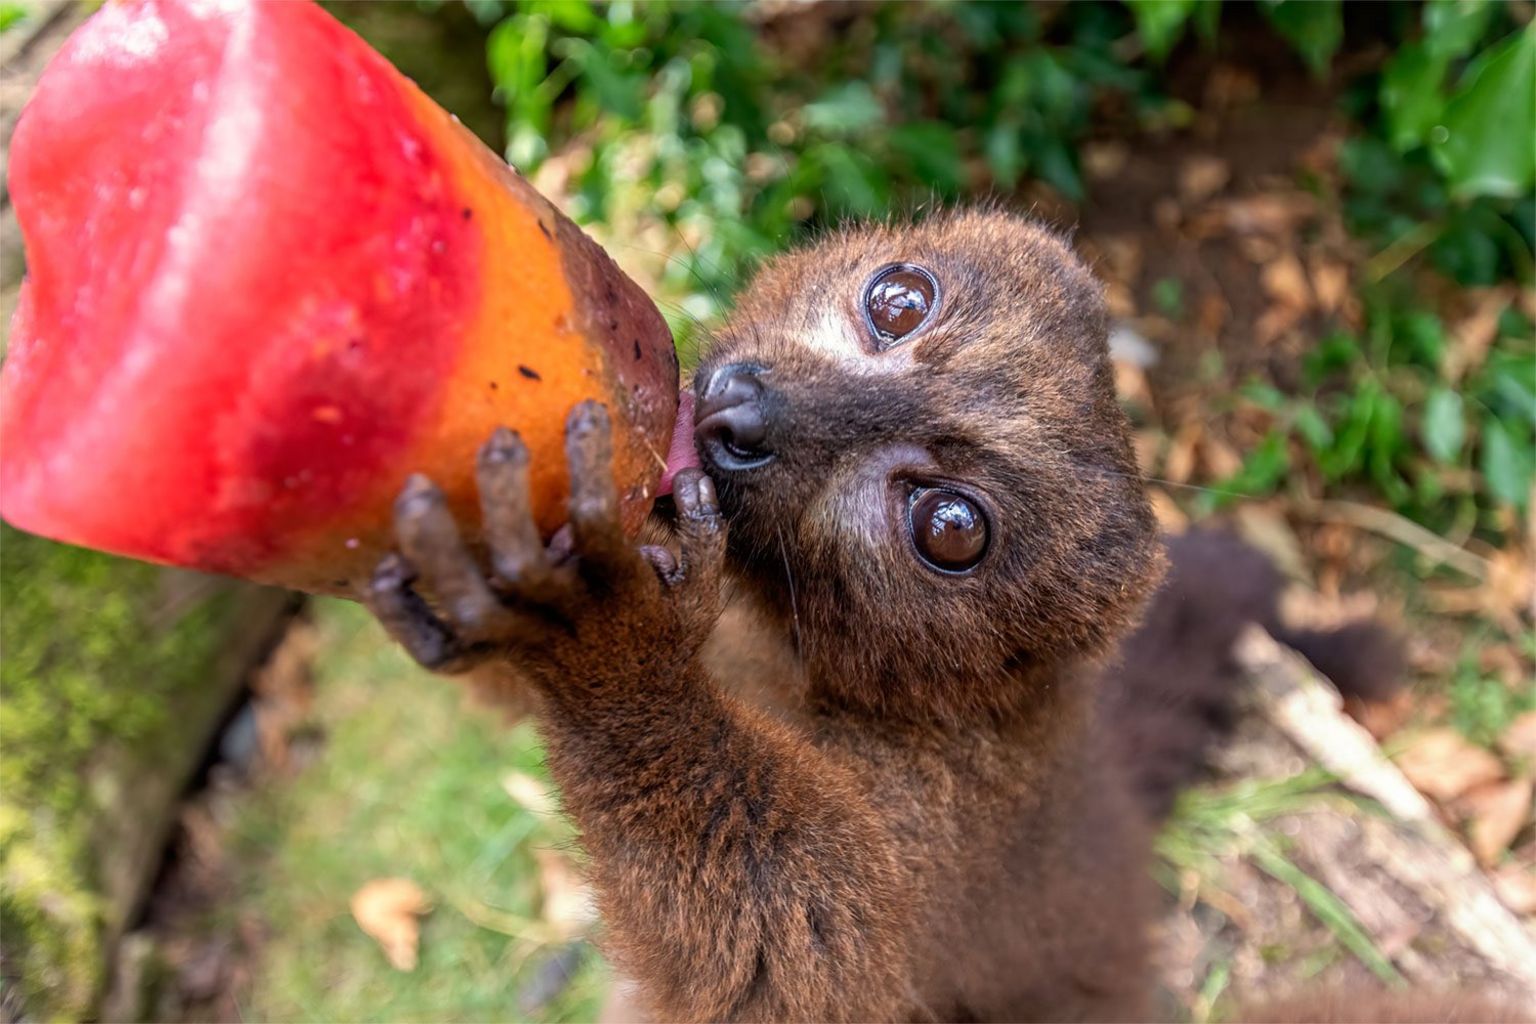 Lemur eating ice lolly